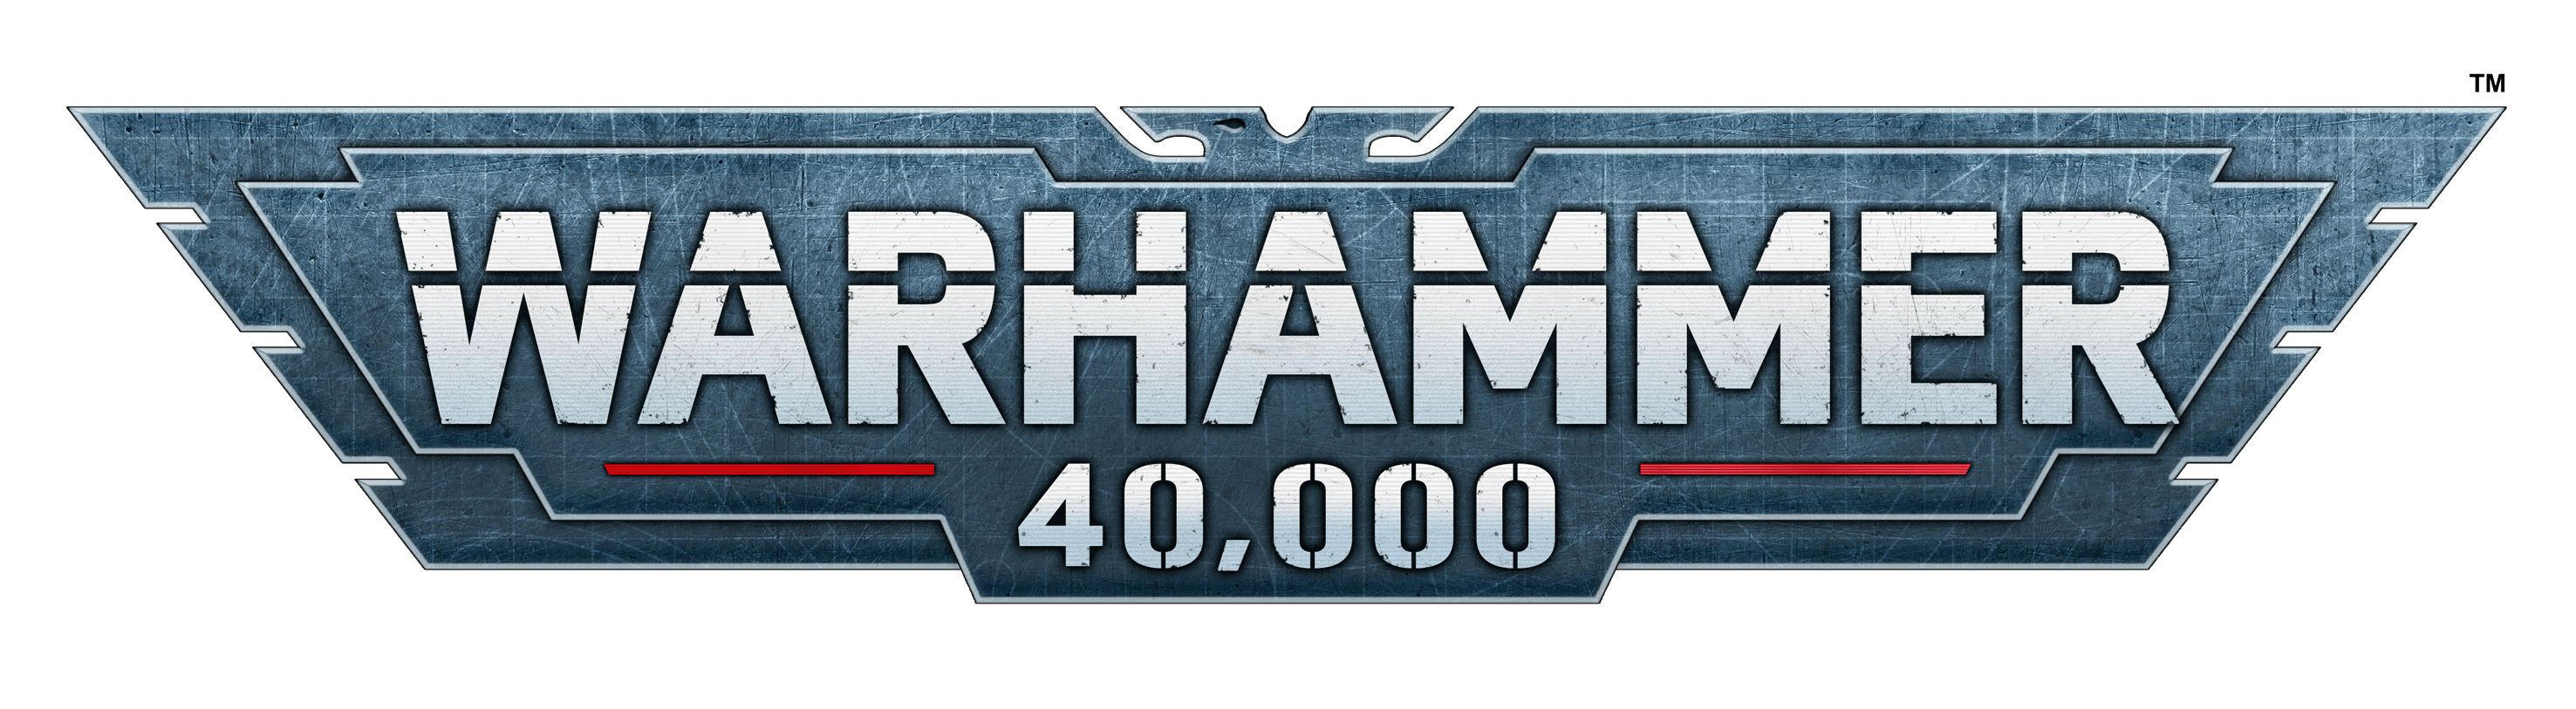 Warhammer 40,000 : Set Peinture + Outils